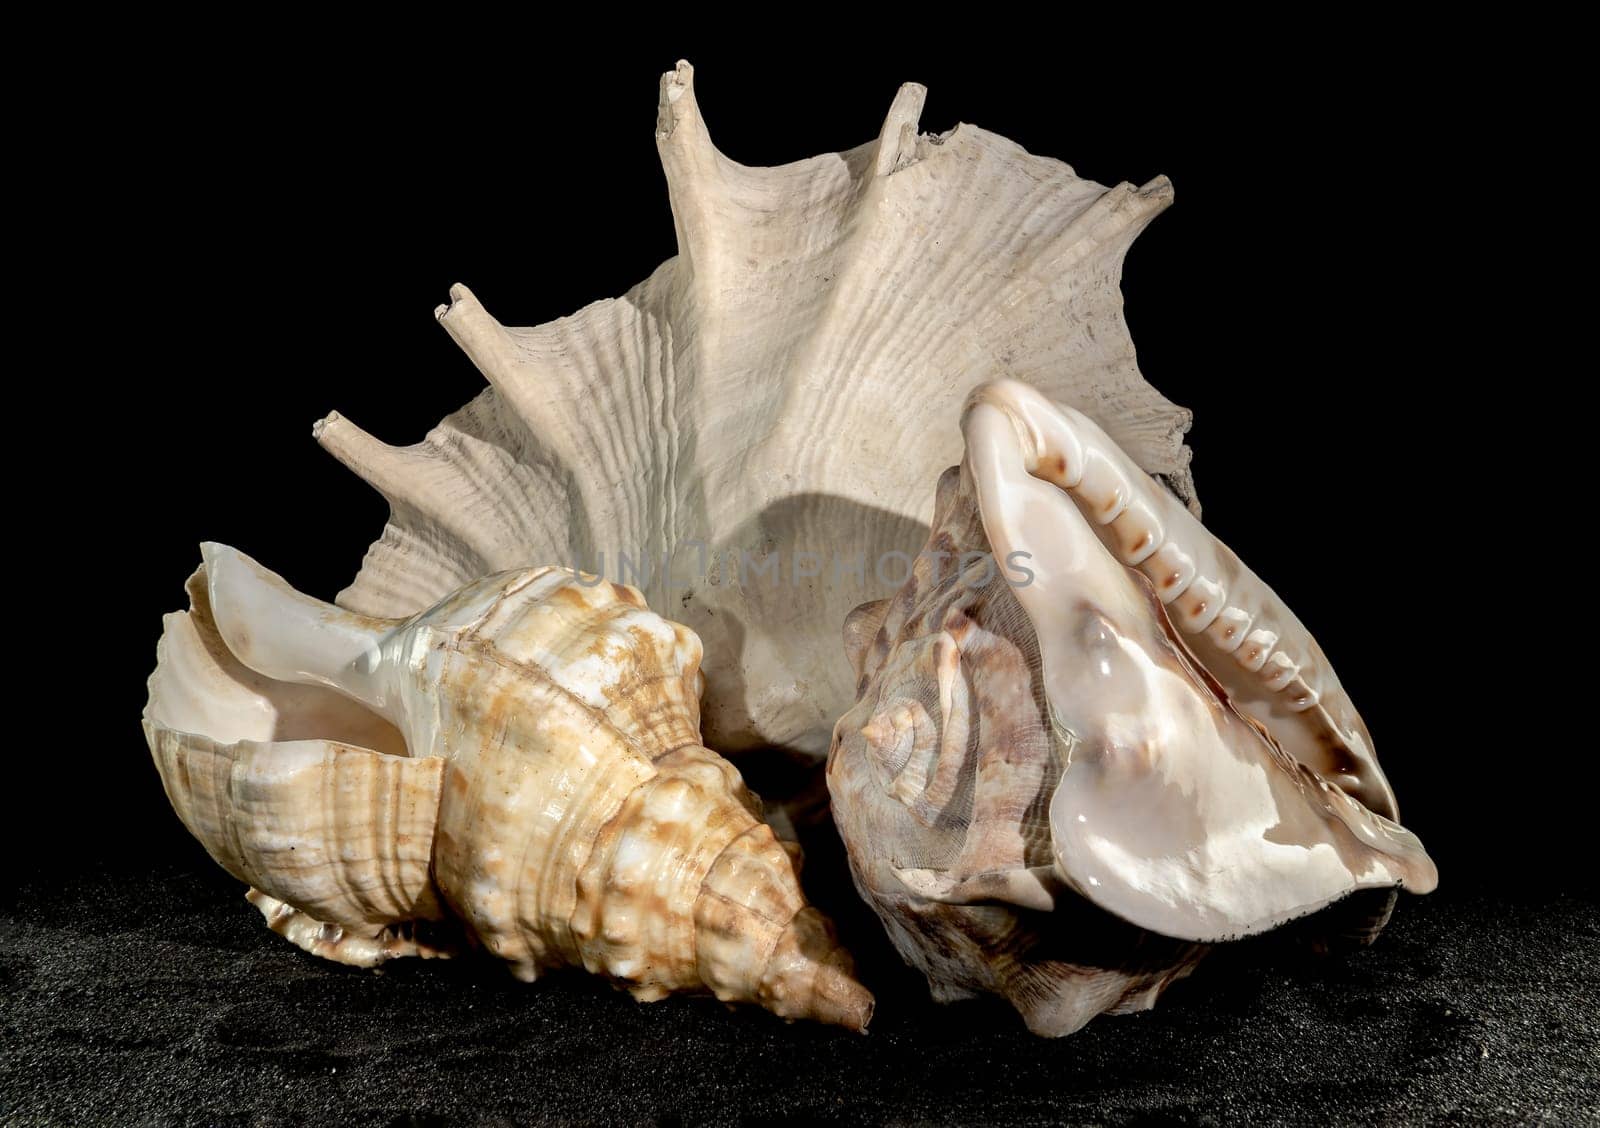 Still life Composition of the three big seashells on a black sand background.